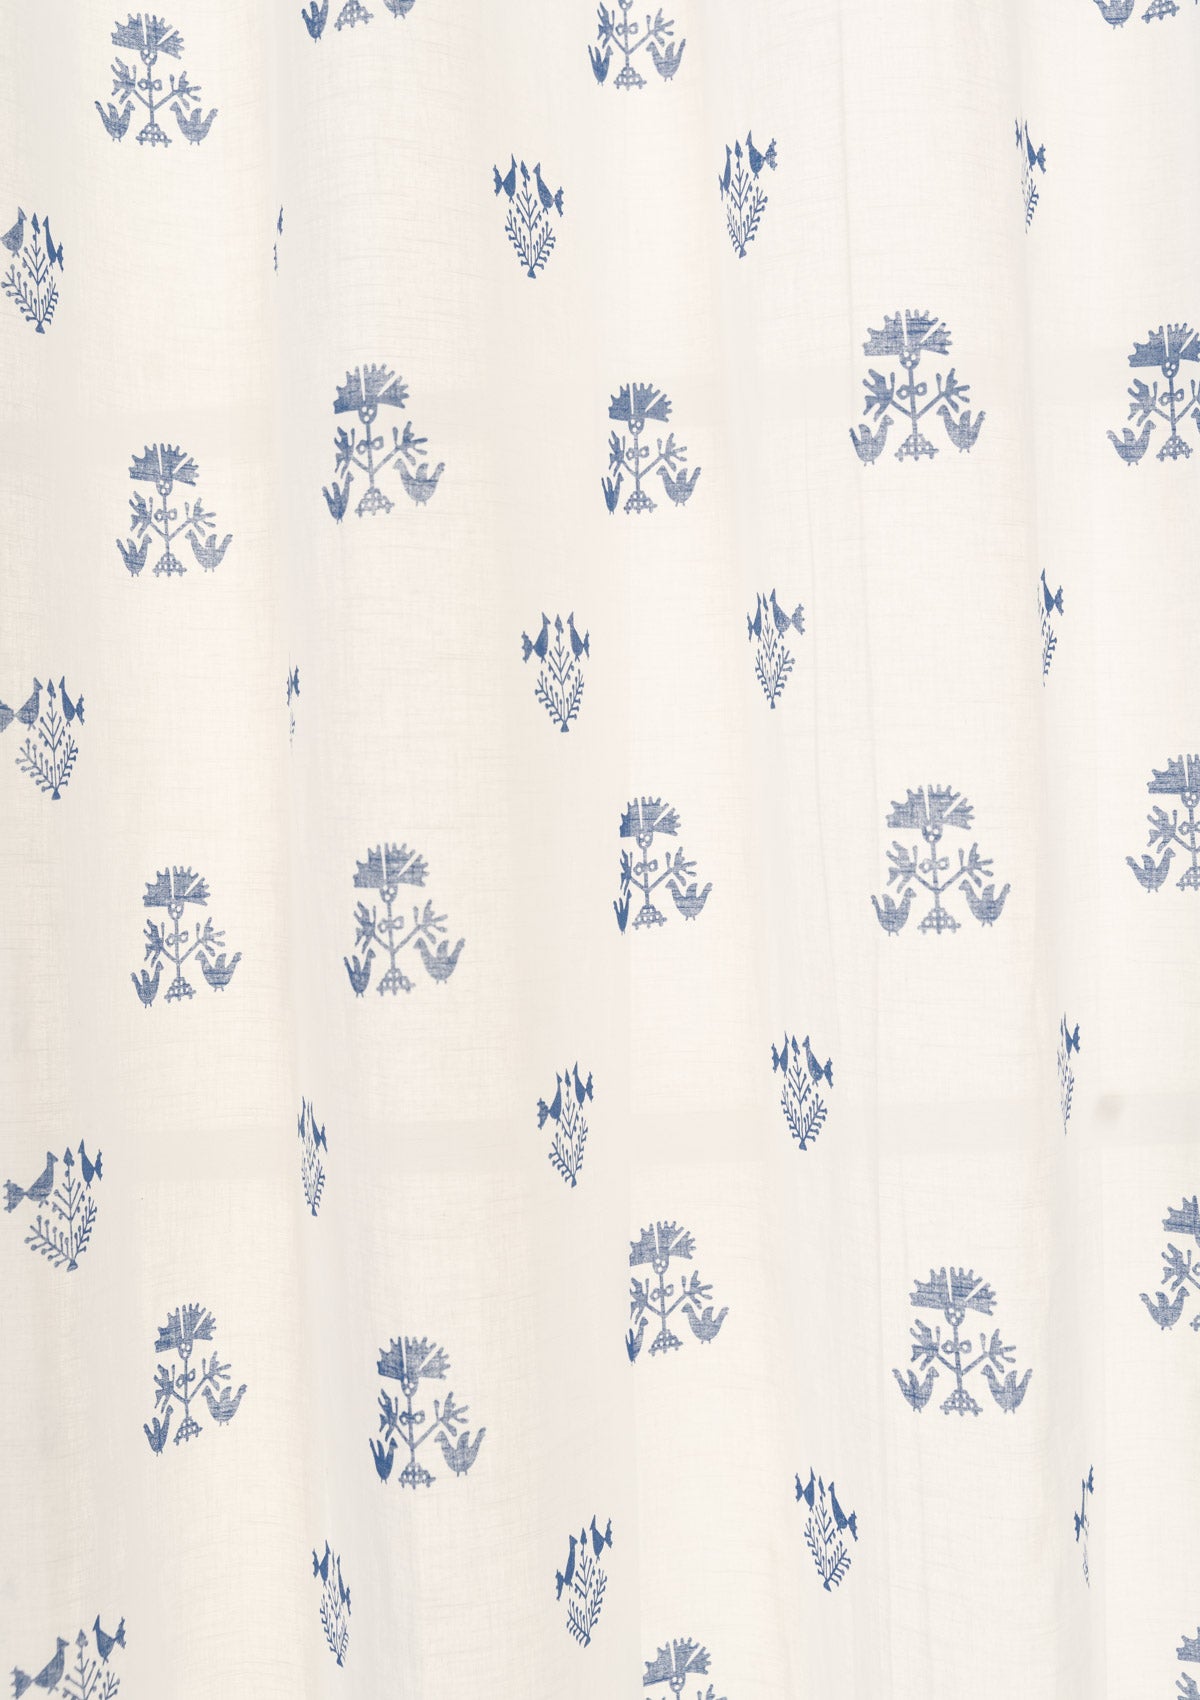 Sunbird 100% cotton floral sheer curtain for living room - Light filtering - Indigo - Single - Pack of 1